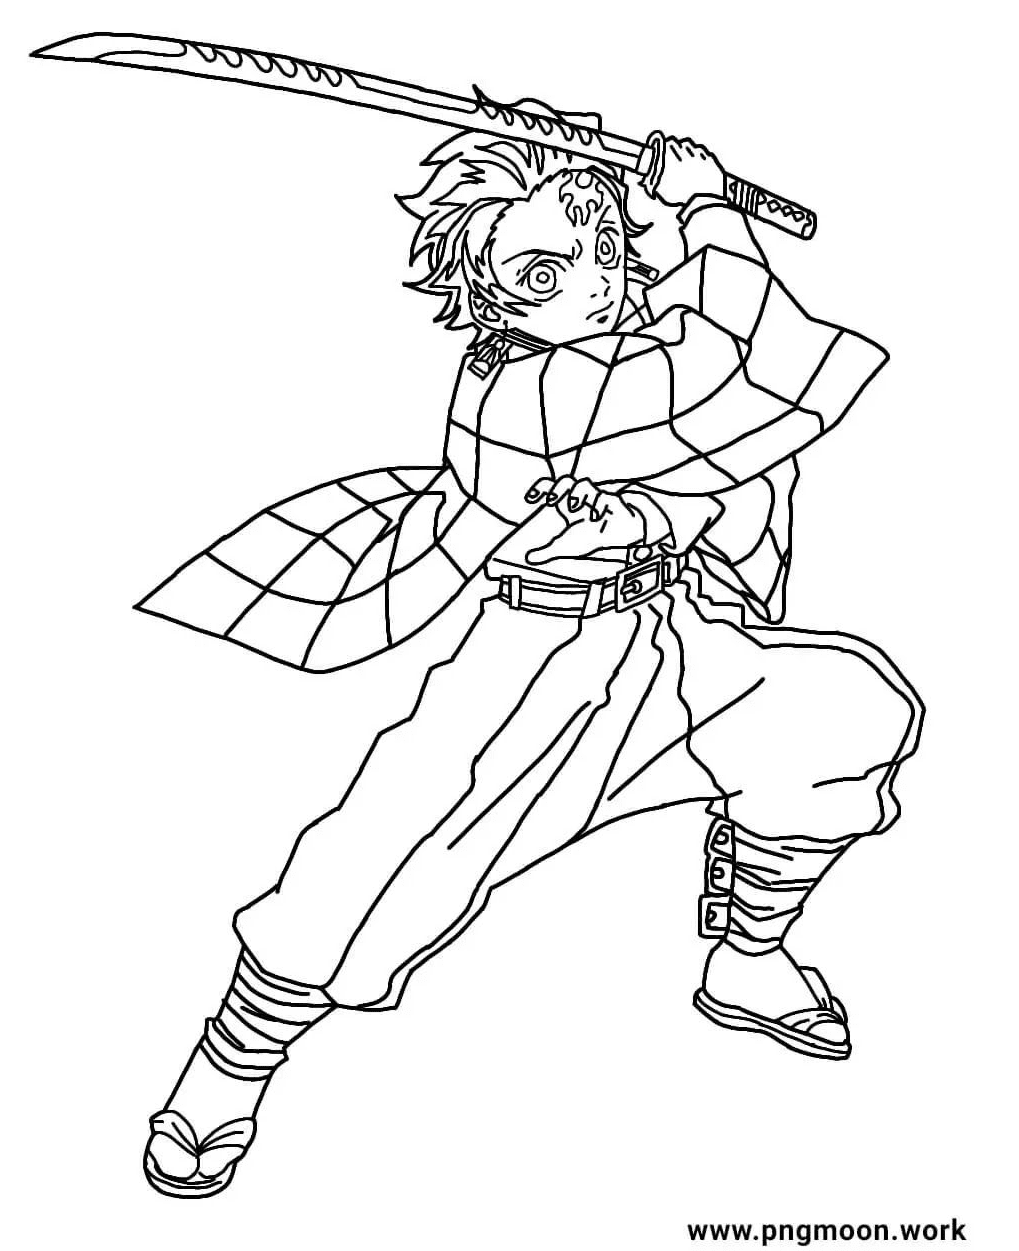 Tanjiro Kamado Brays His Sword Coloring Page [Printable]